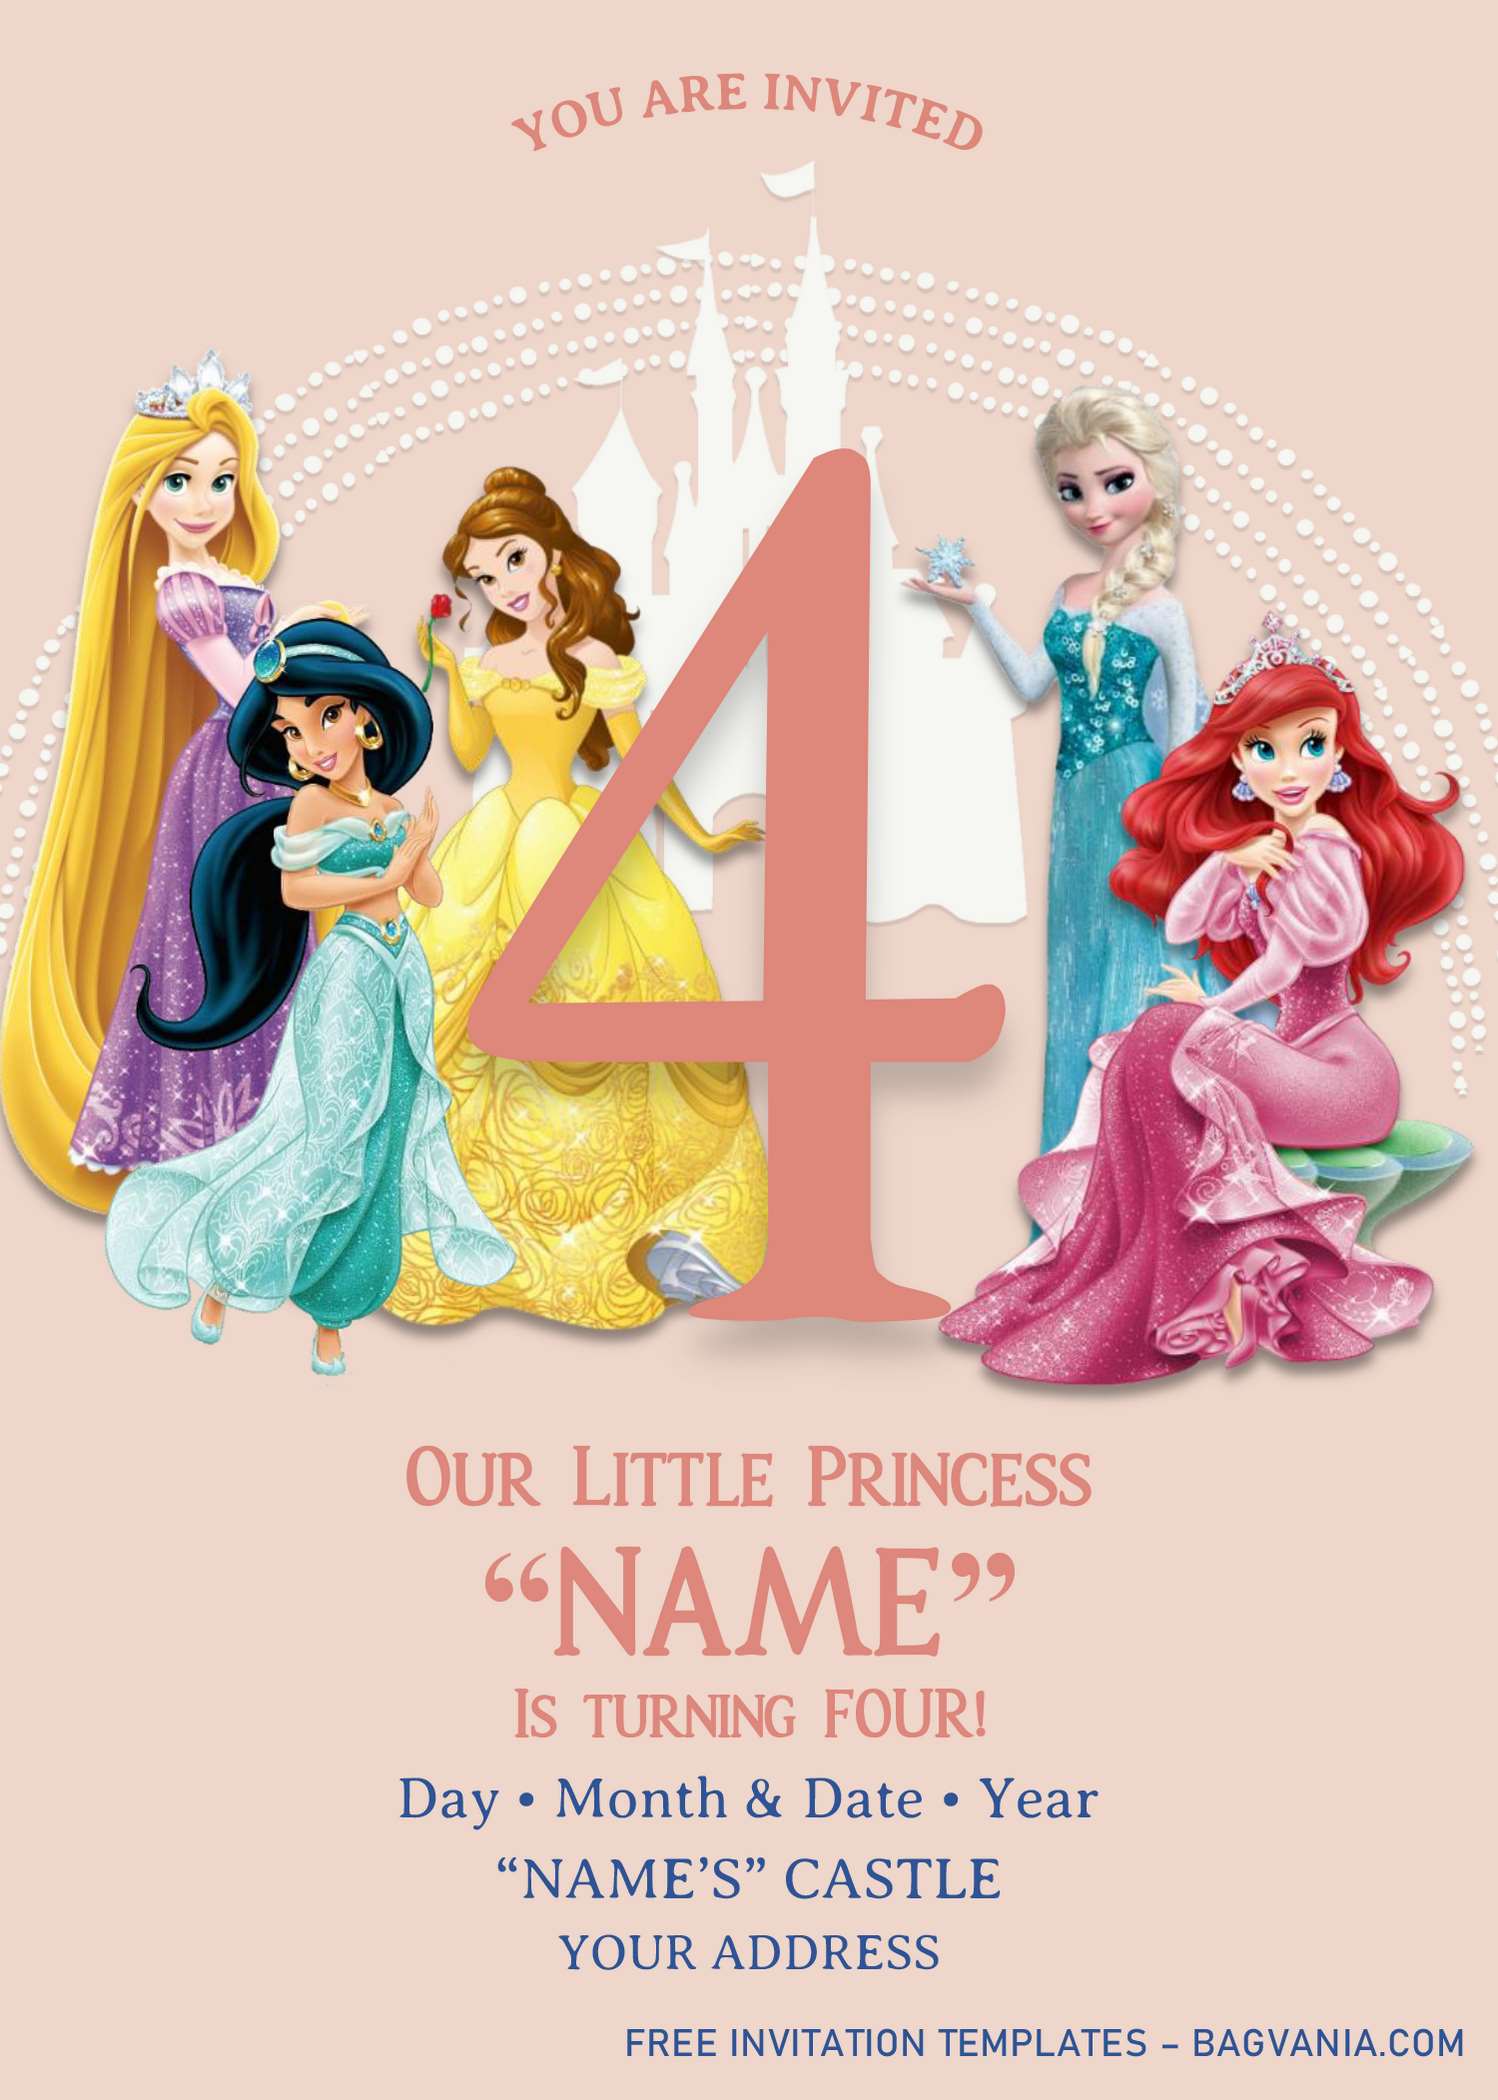 Disney Princess Invitation Templates Editable With Ms - vrogue.co